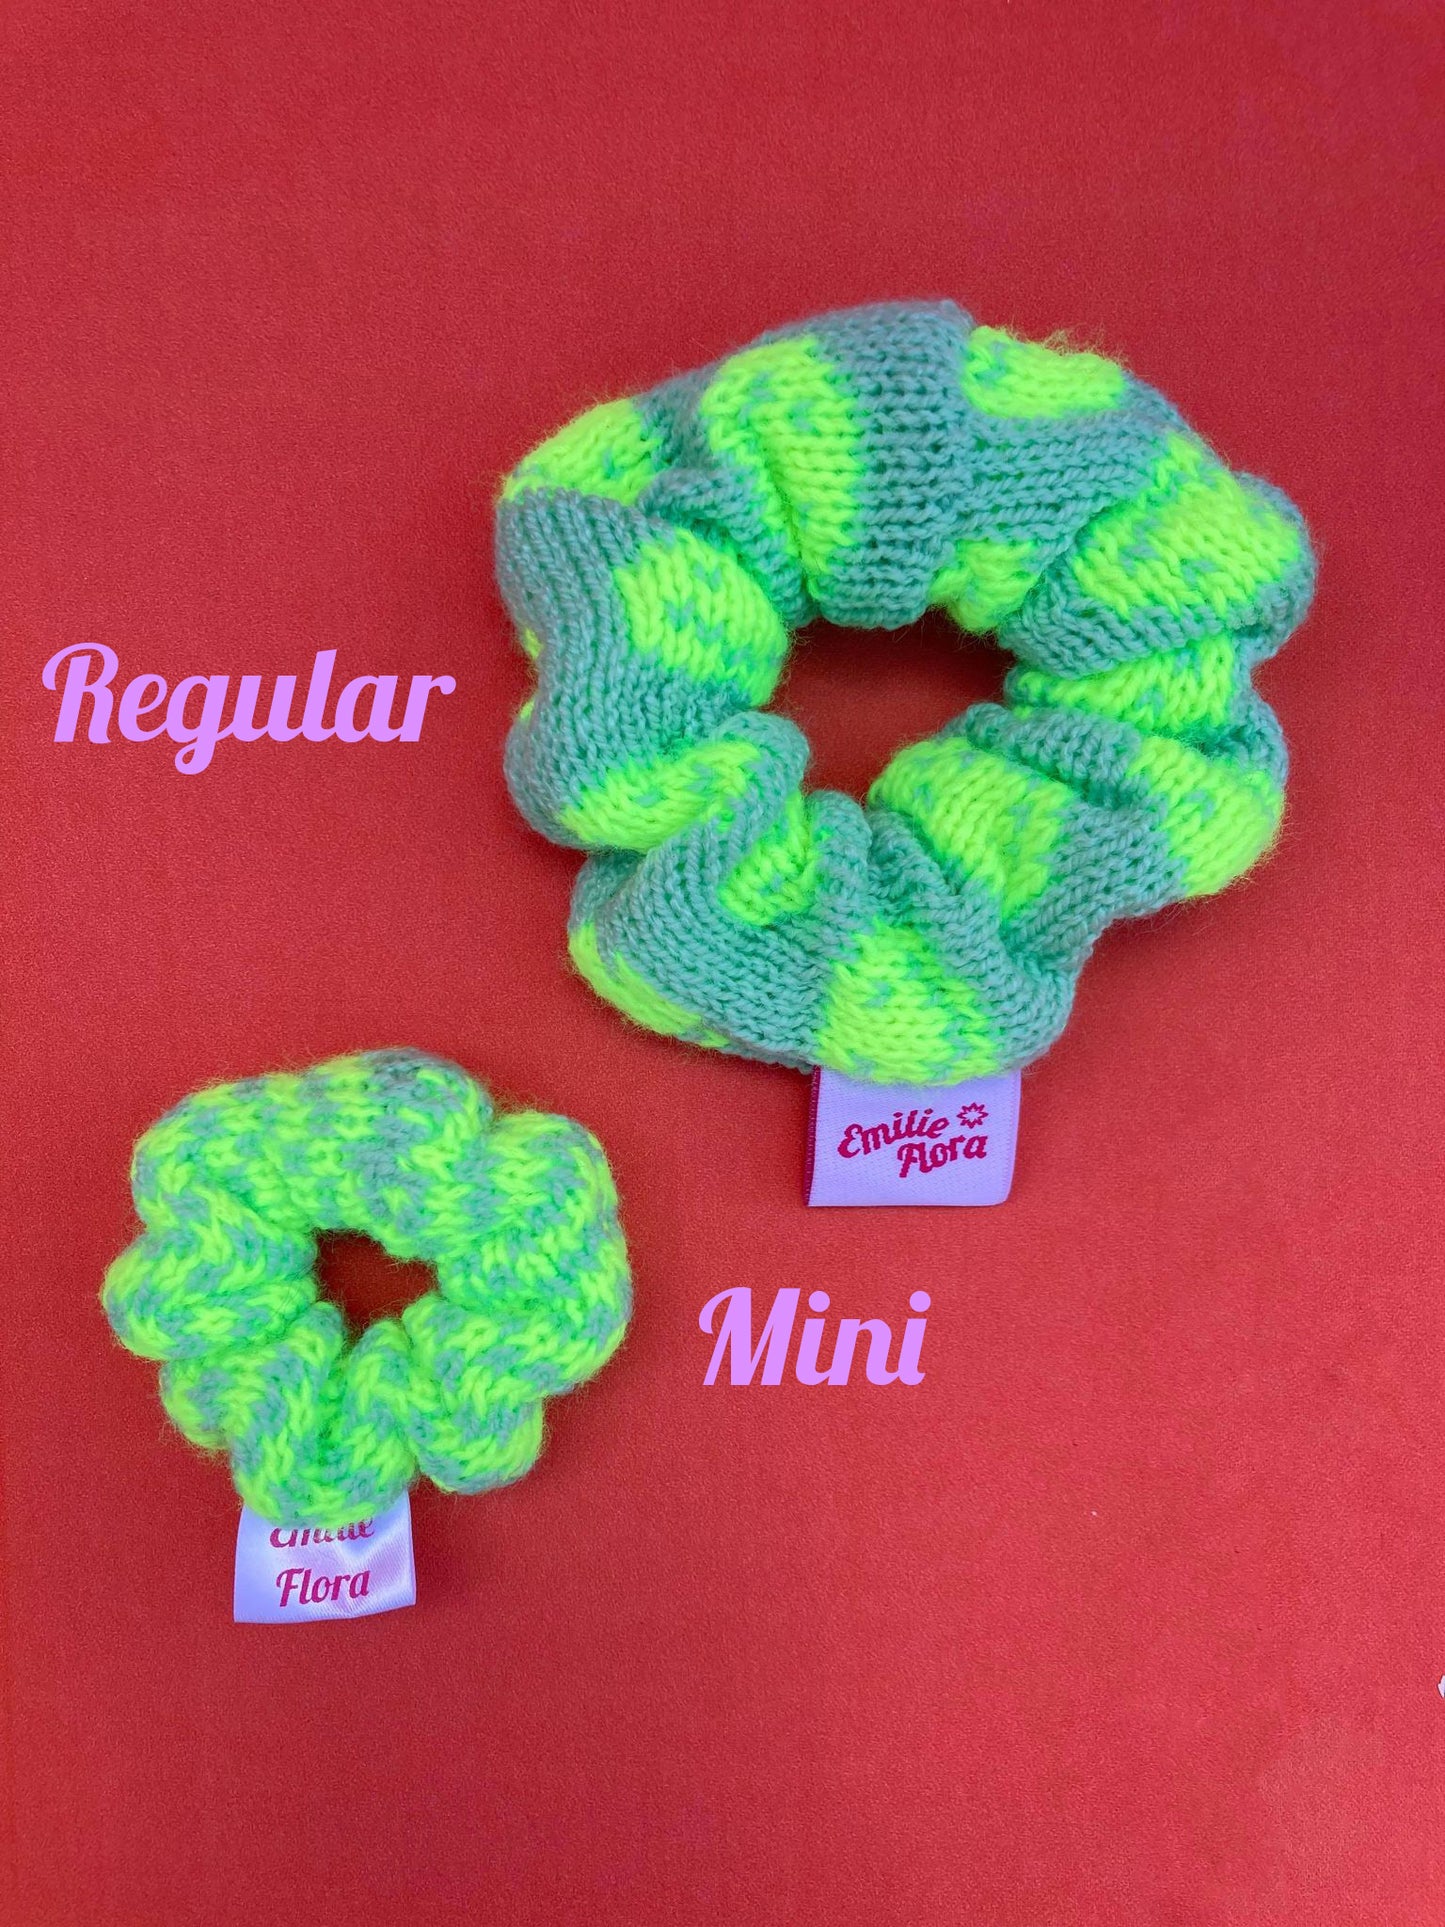 Mini Knitted Scrunchie - Zigzag - Black and White